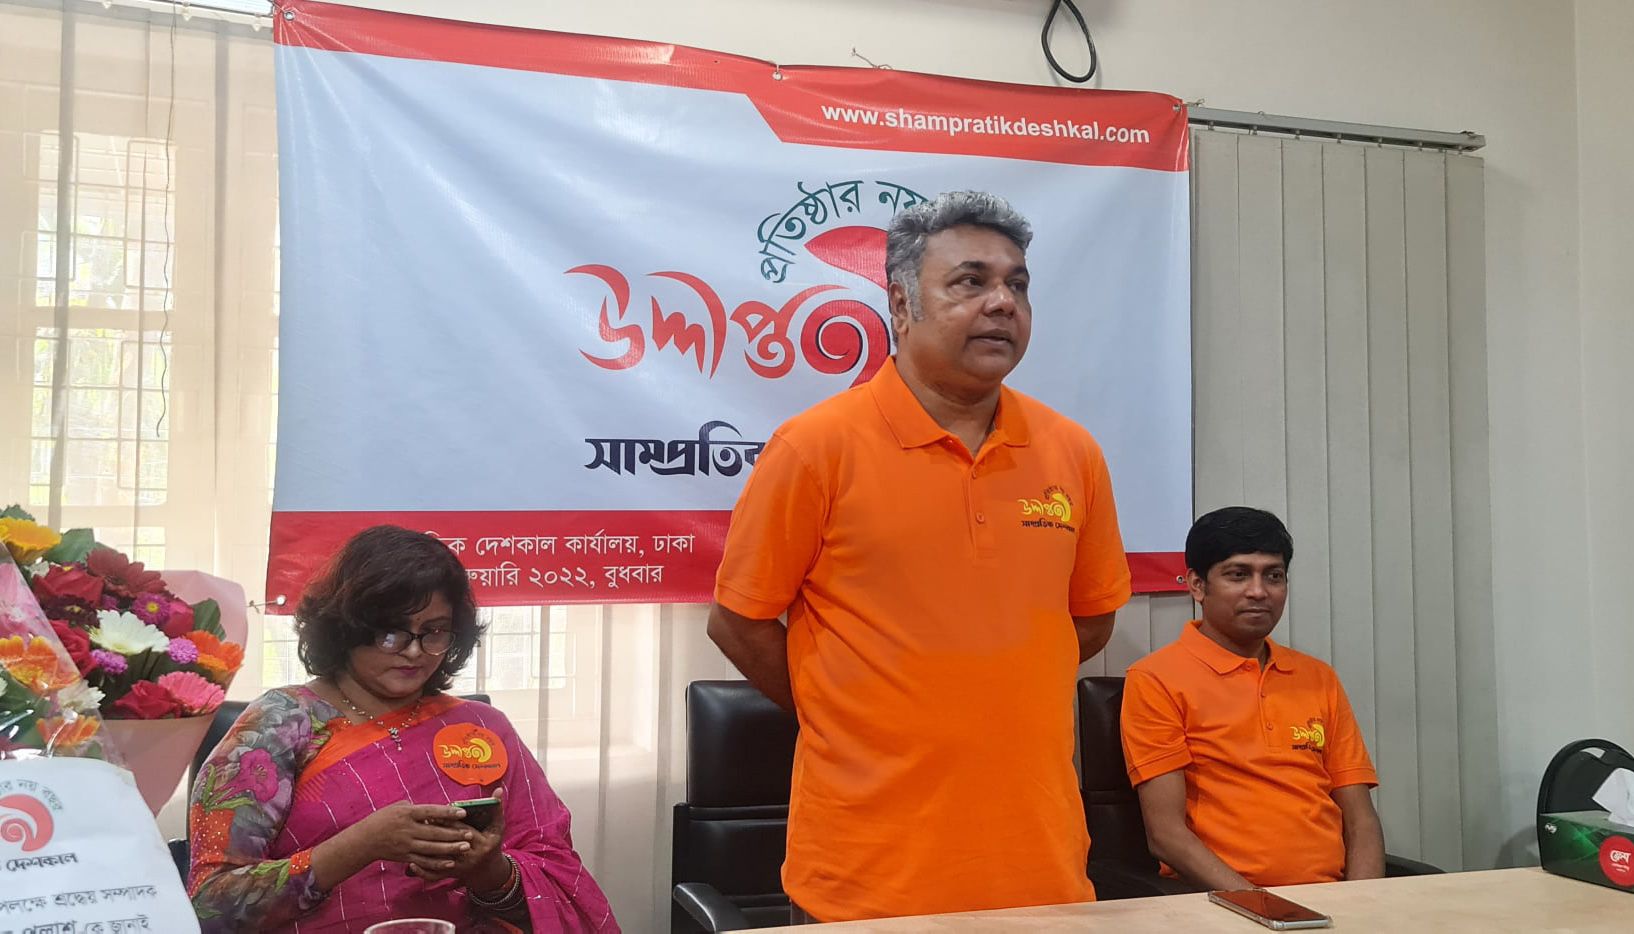 Shampratik Deshkal Editor Eliash Uddin Palash delivers his greeting speech.